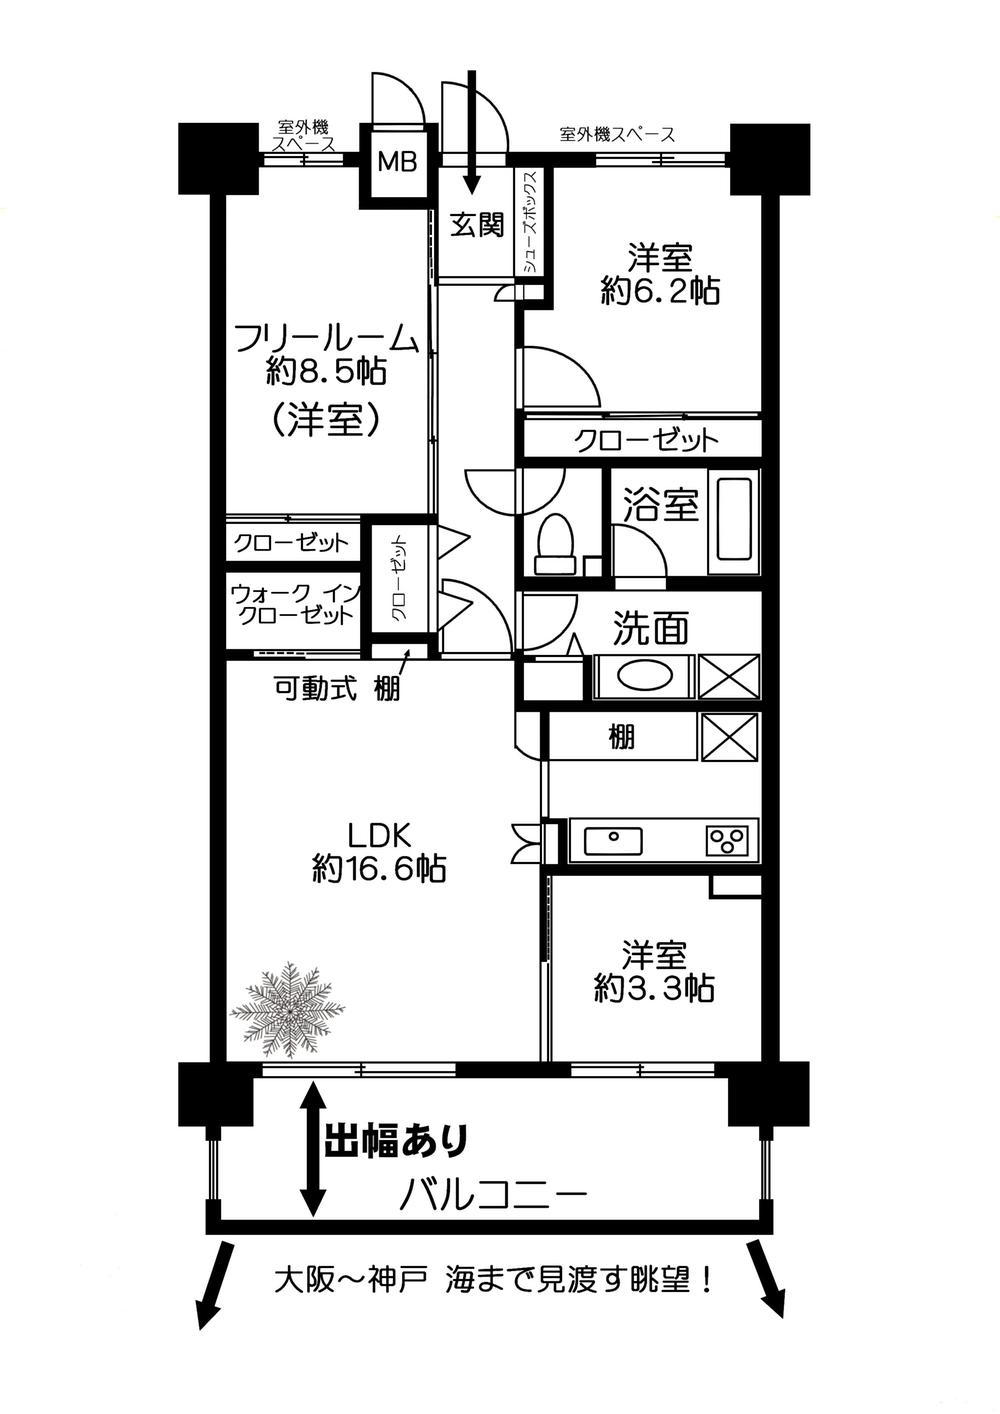 Floor plan. 3LDK, Price 57,800,000 yen, Occupied area 80.03 sq m , Balcony area 14 sq m